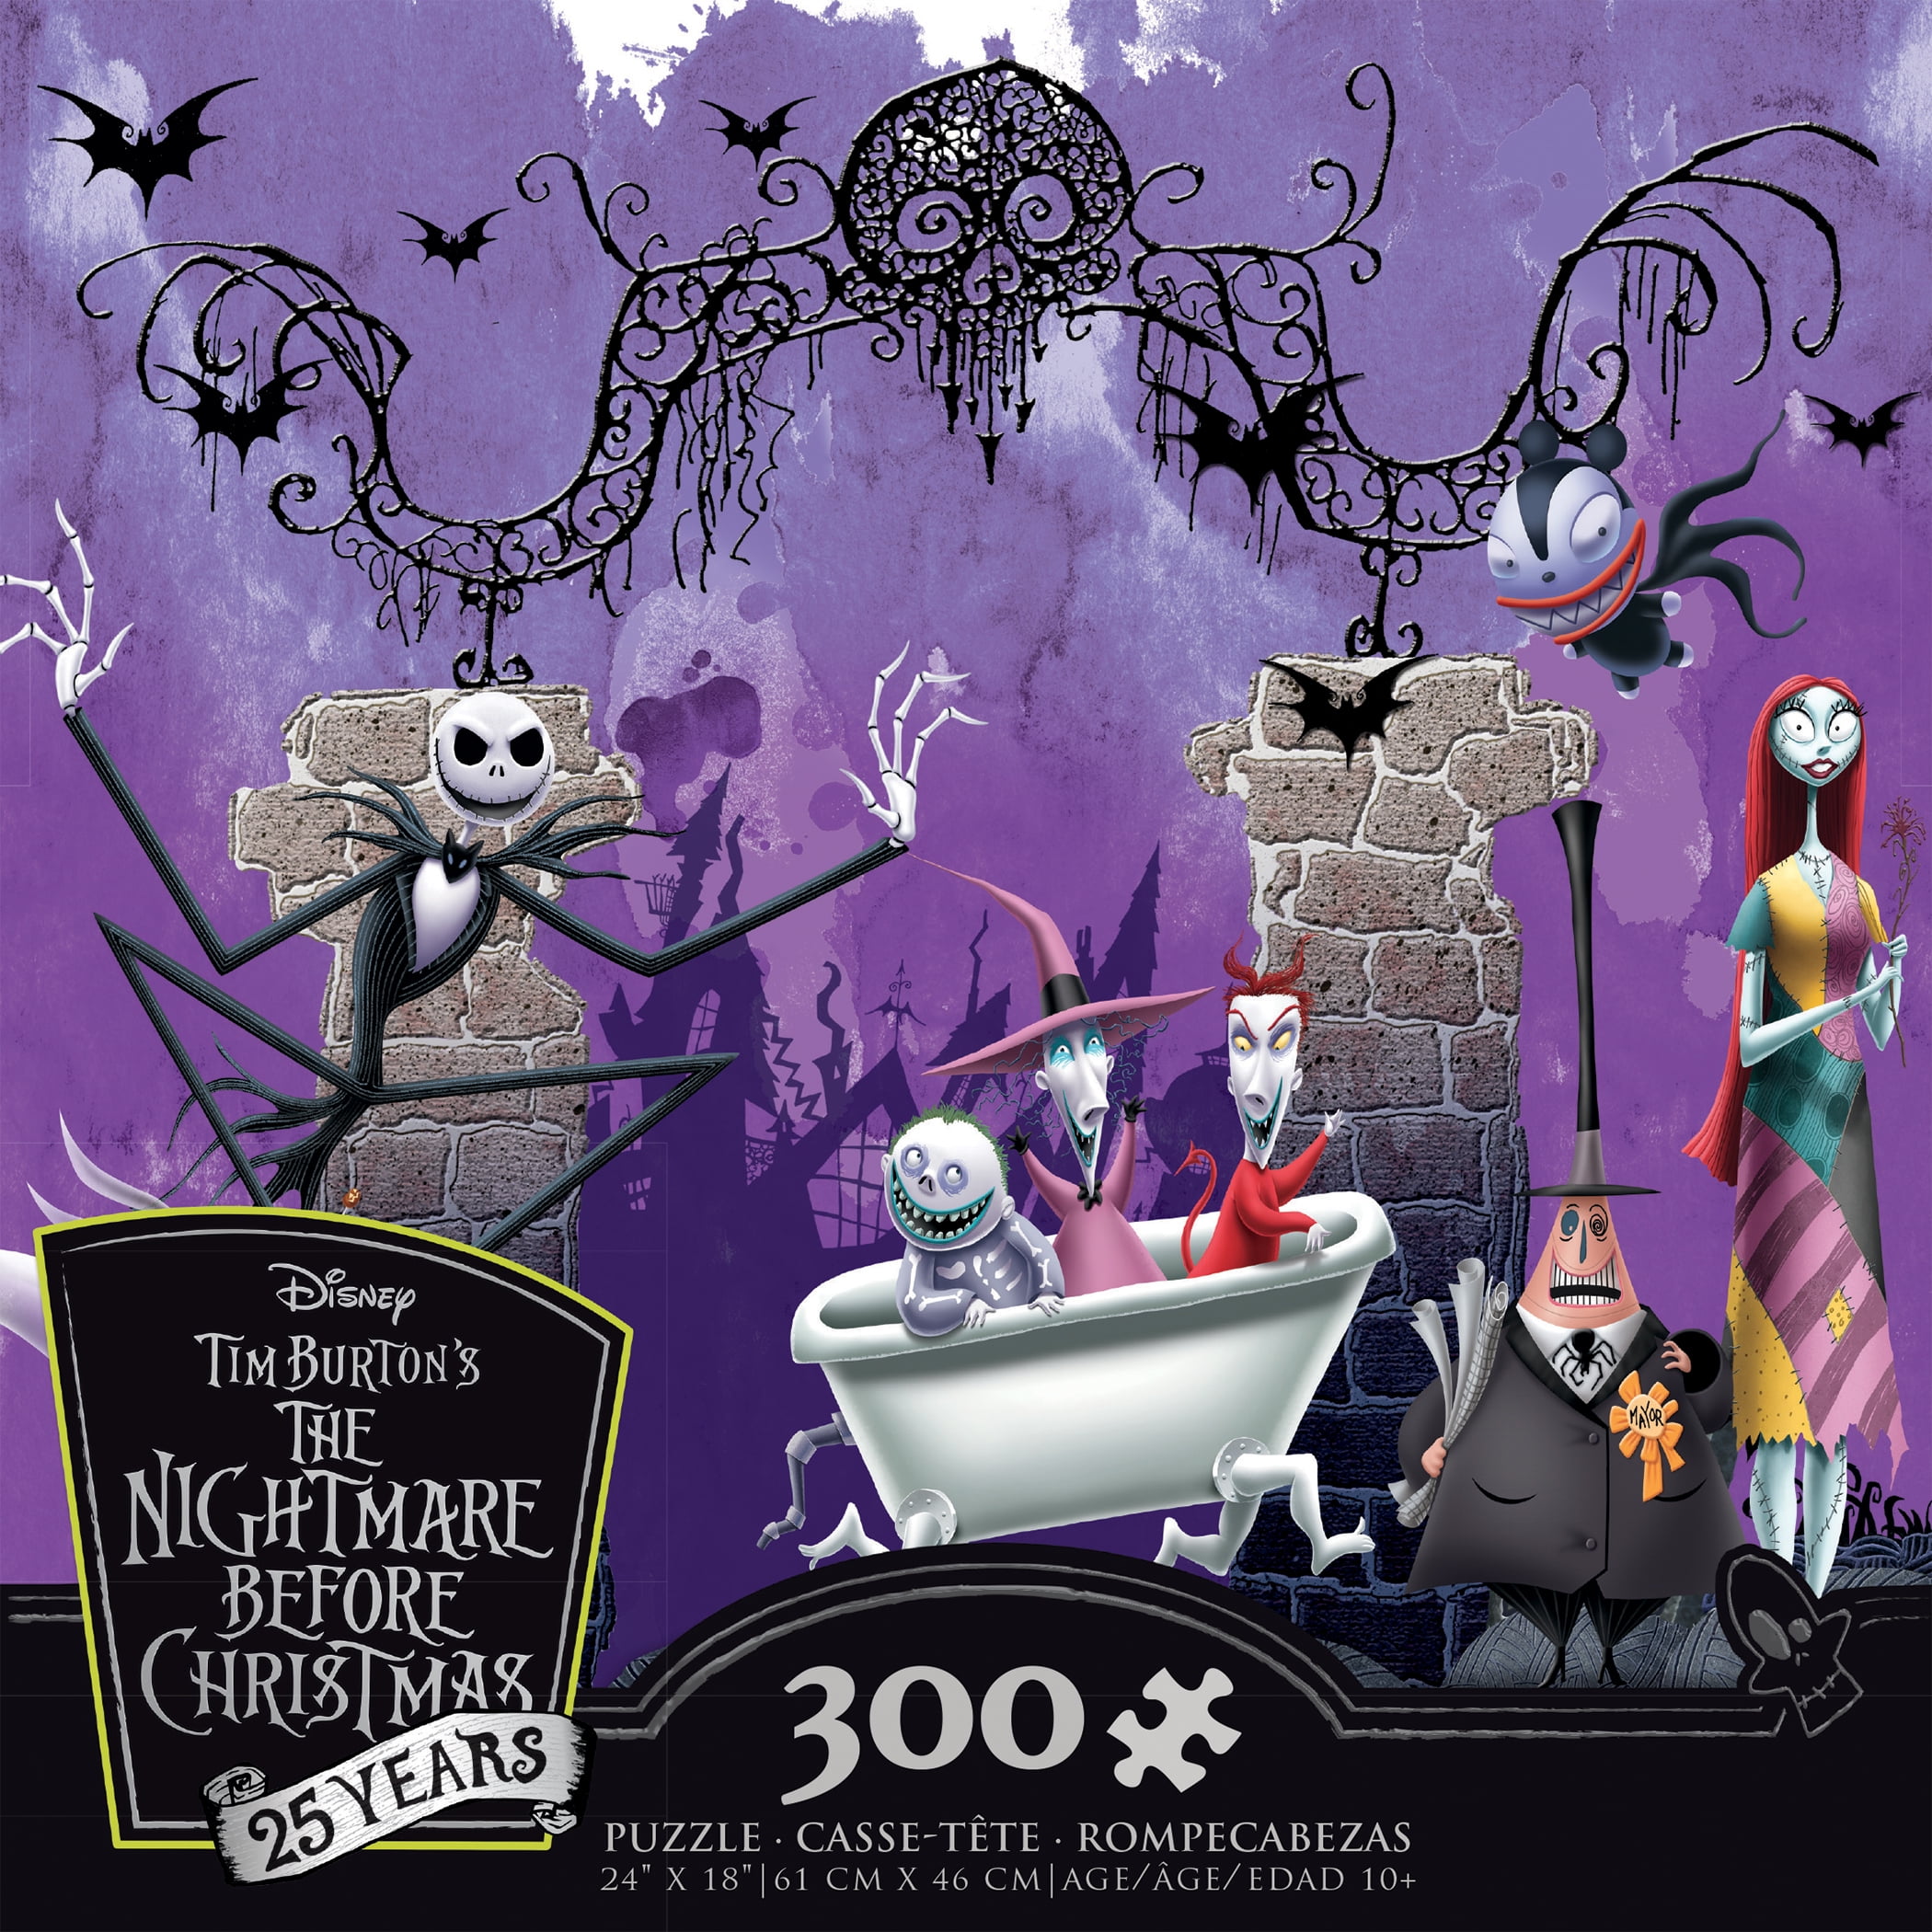 500pcs Jigsaw Puzzle Disney Nightmare Before Christmas Celebrate Spooky!